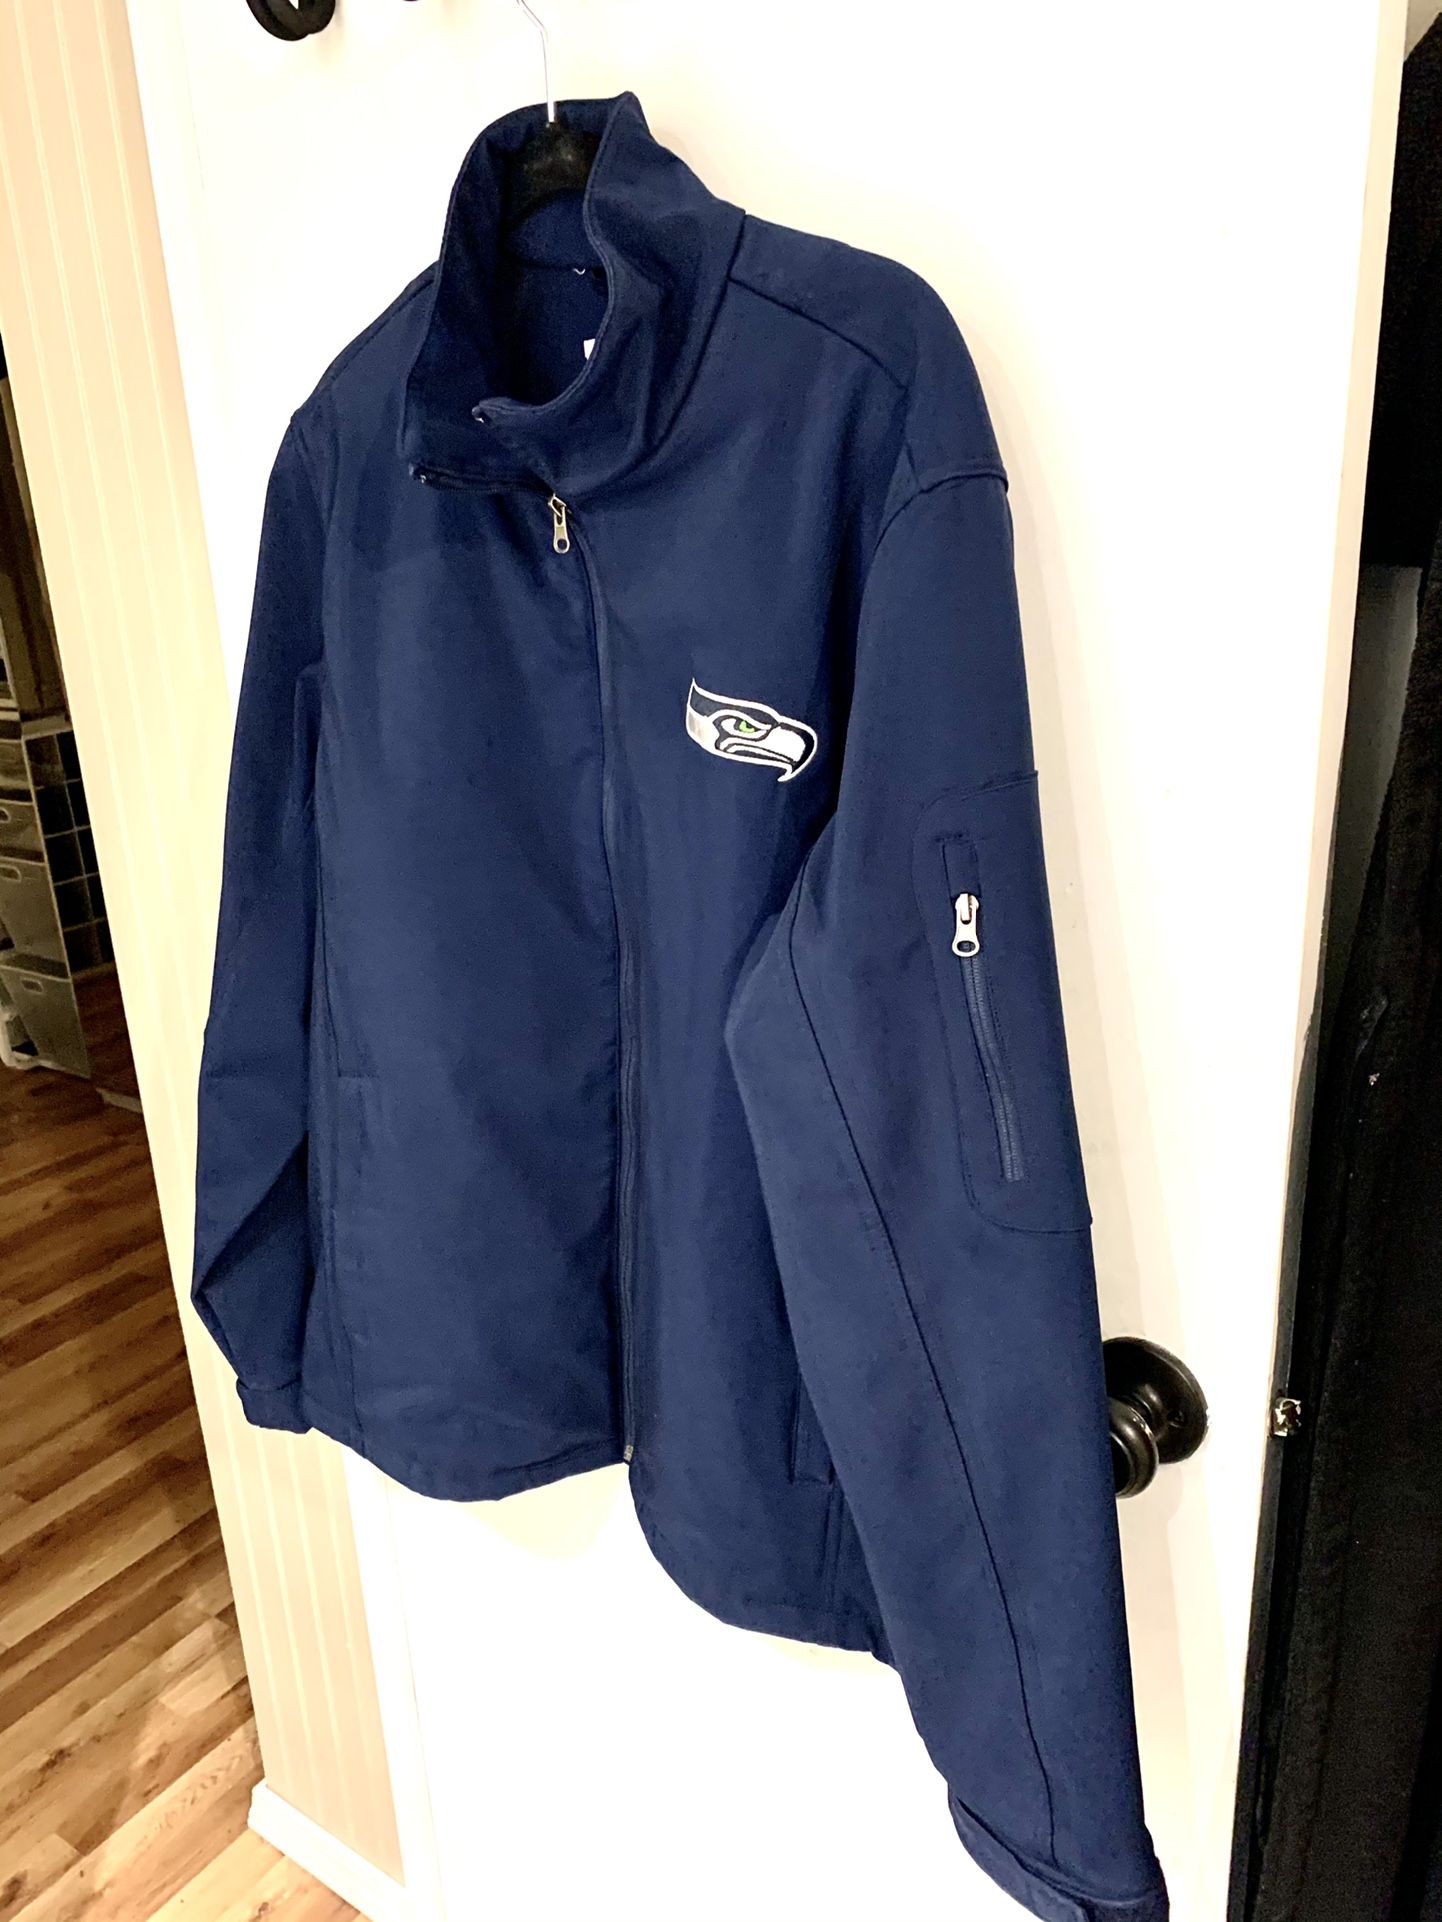 Men’s New NFL Seahawk’s Jacket Large